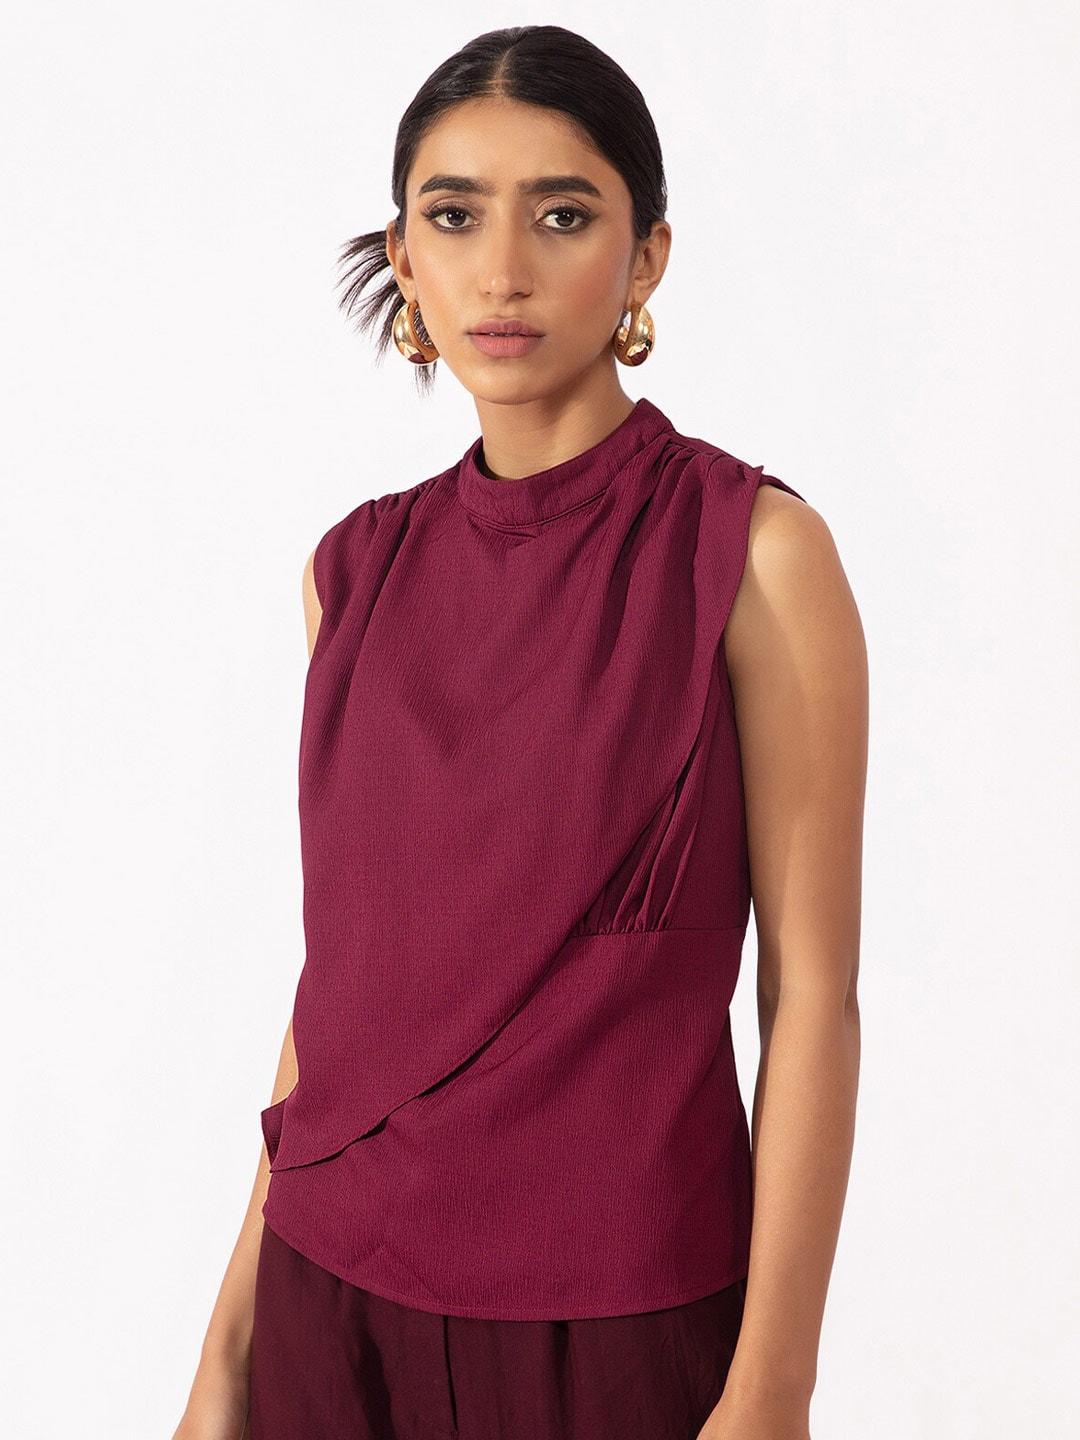 20dresses women sleeveless high neck purple top